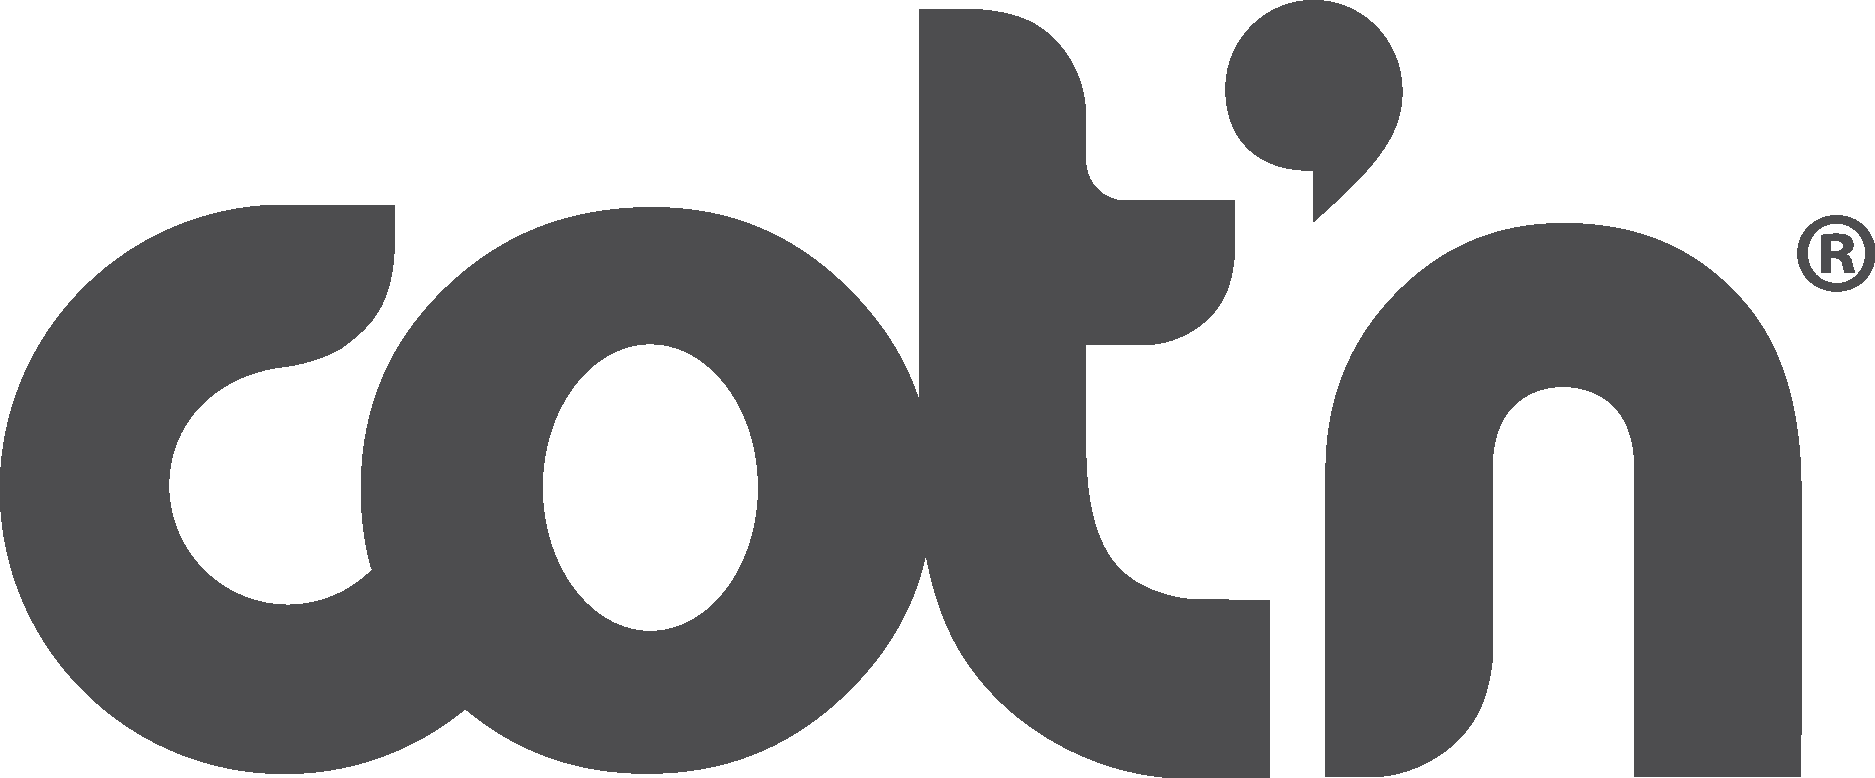 cot’n Logo Vector